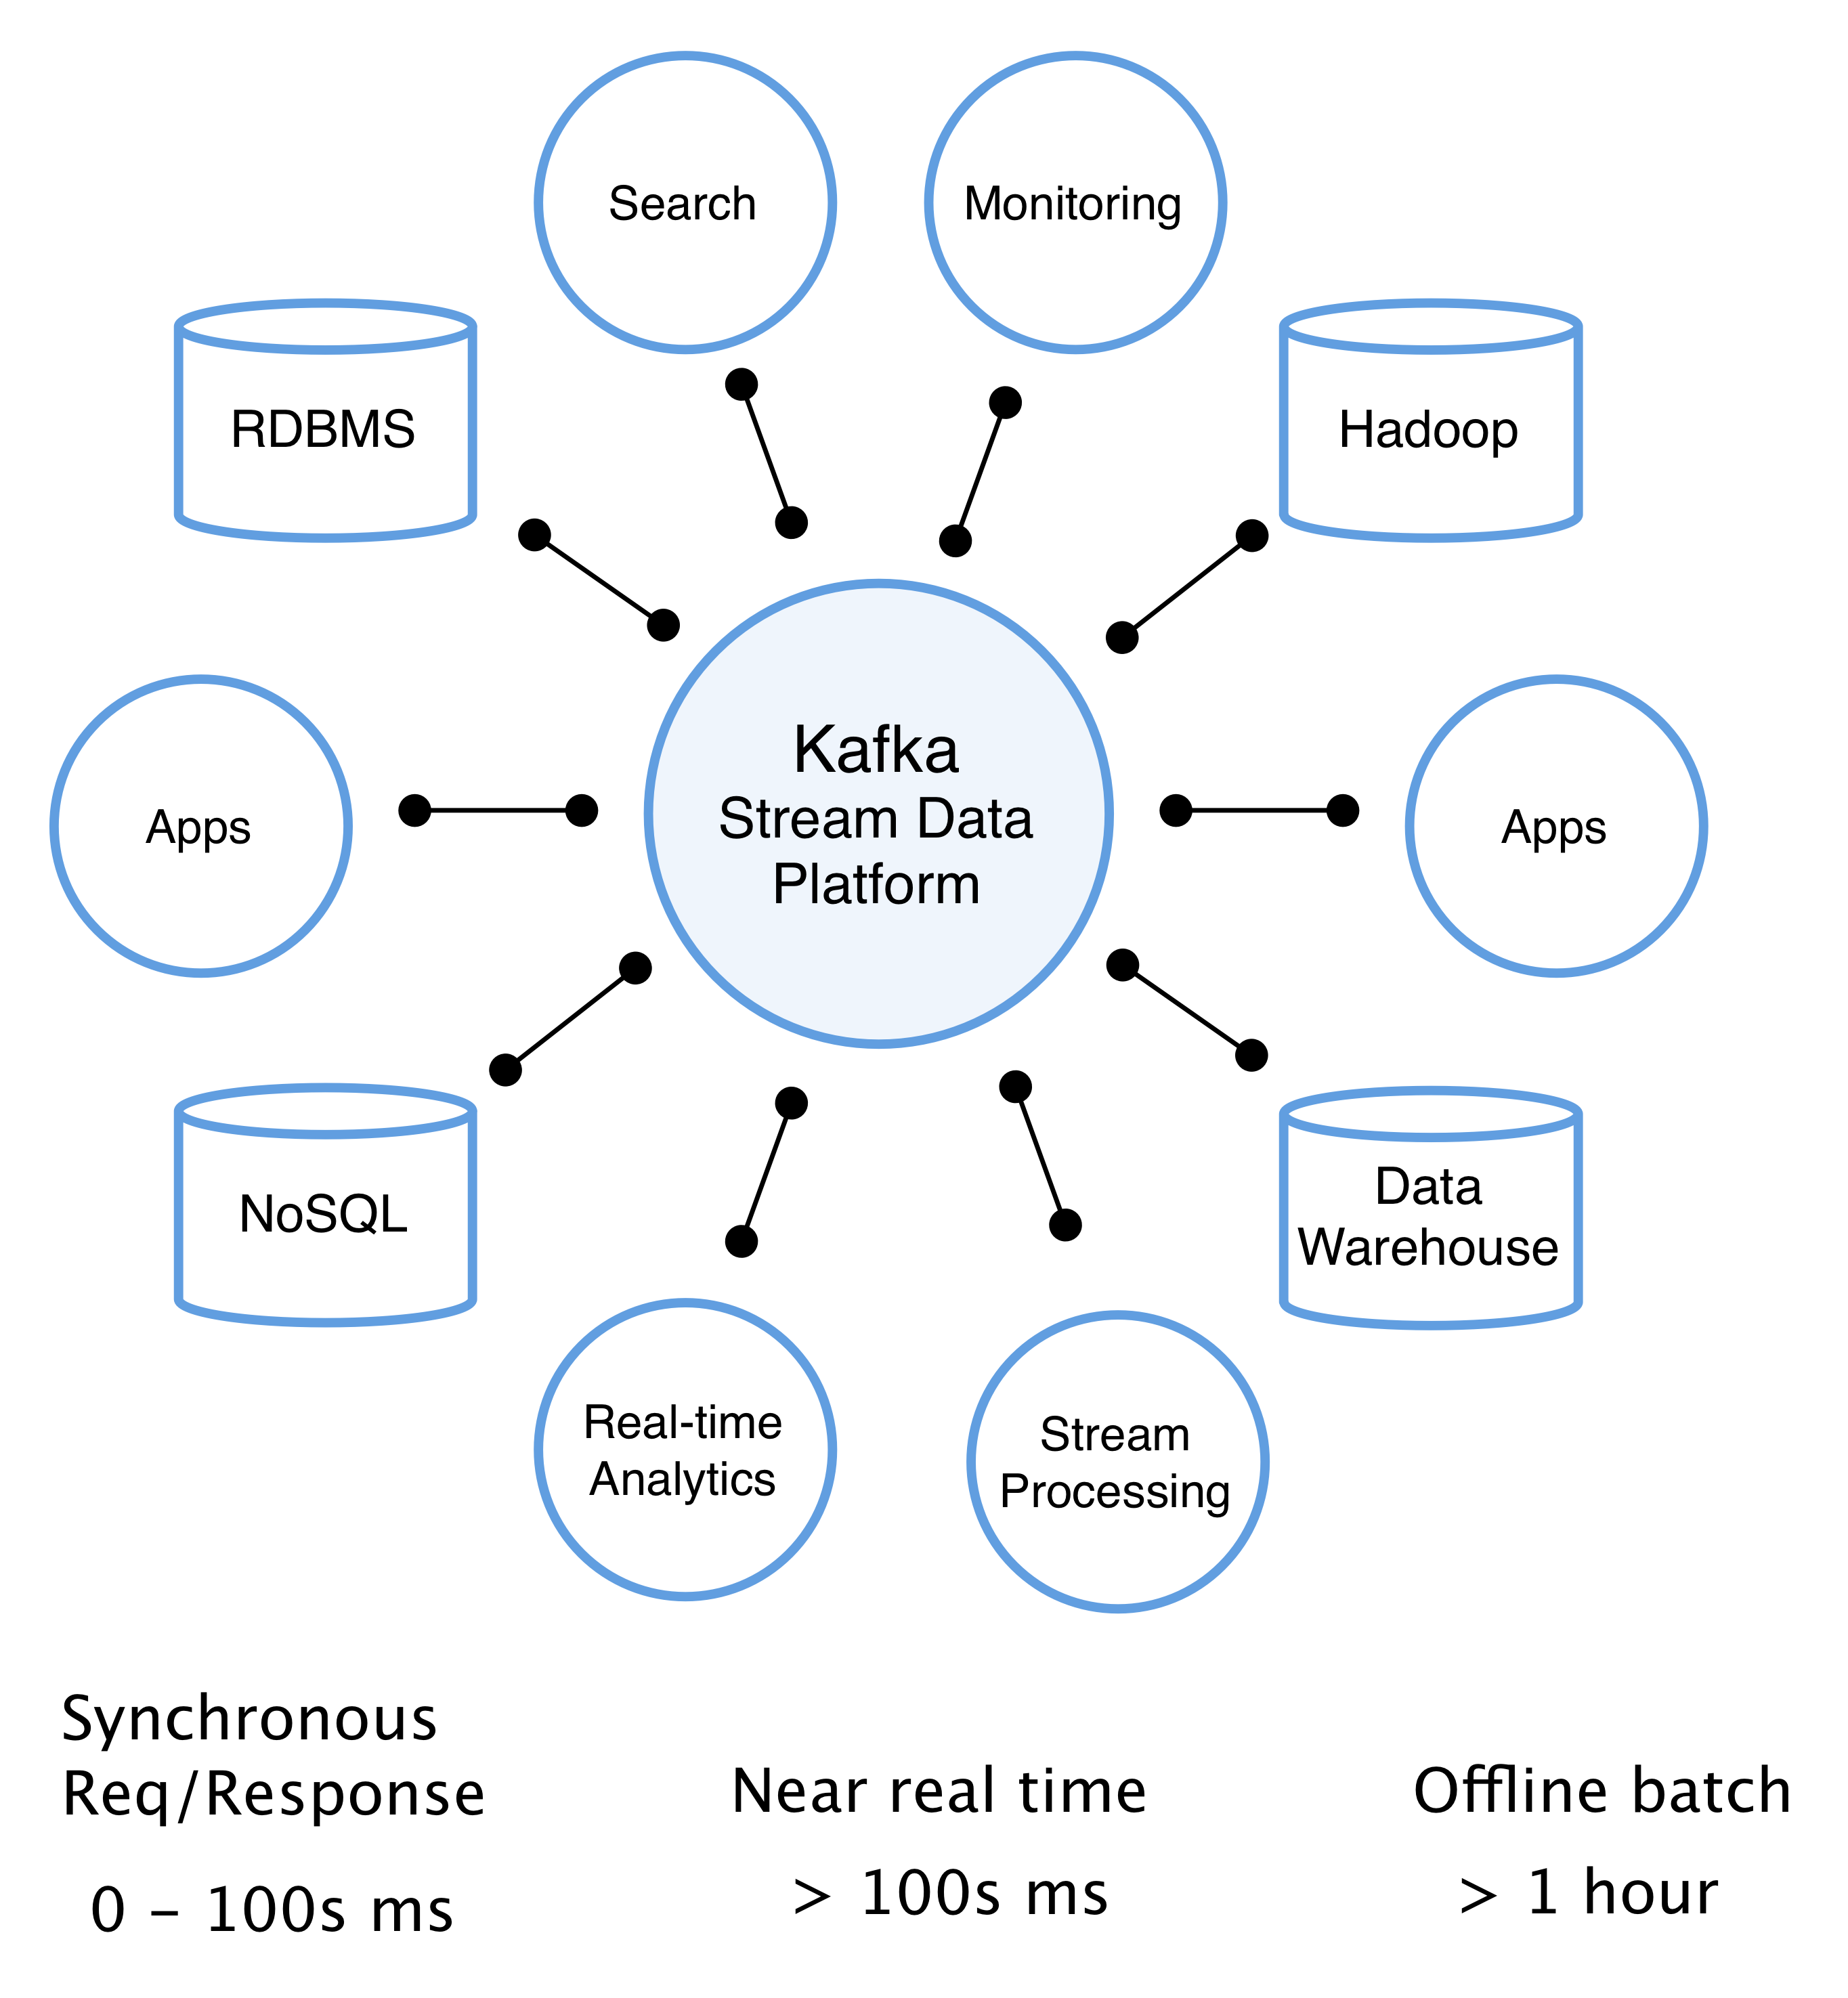 kafka-stream-data-platform-12-8-15.png